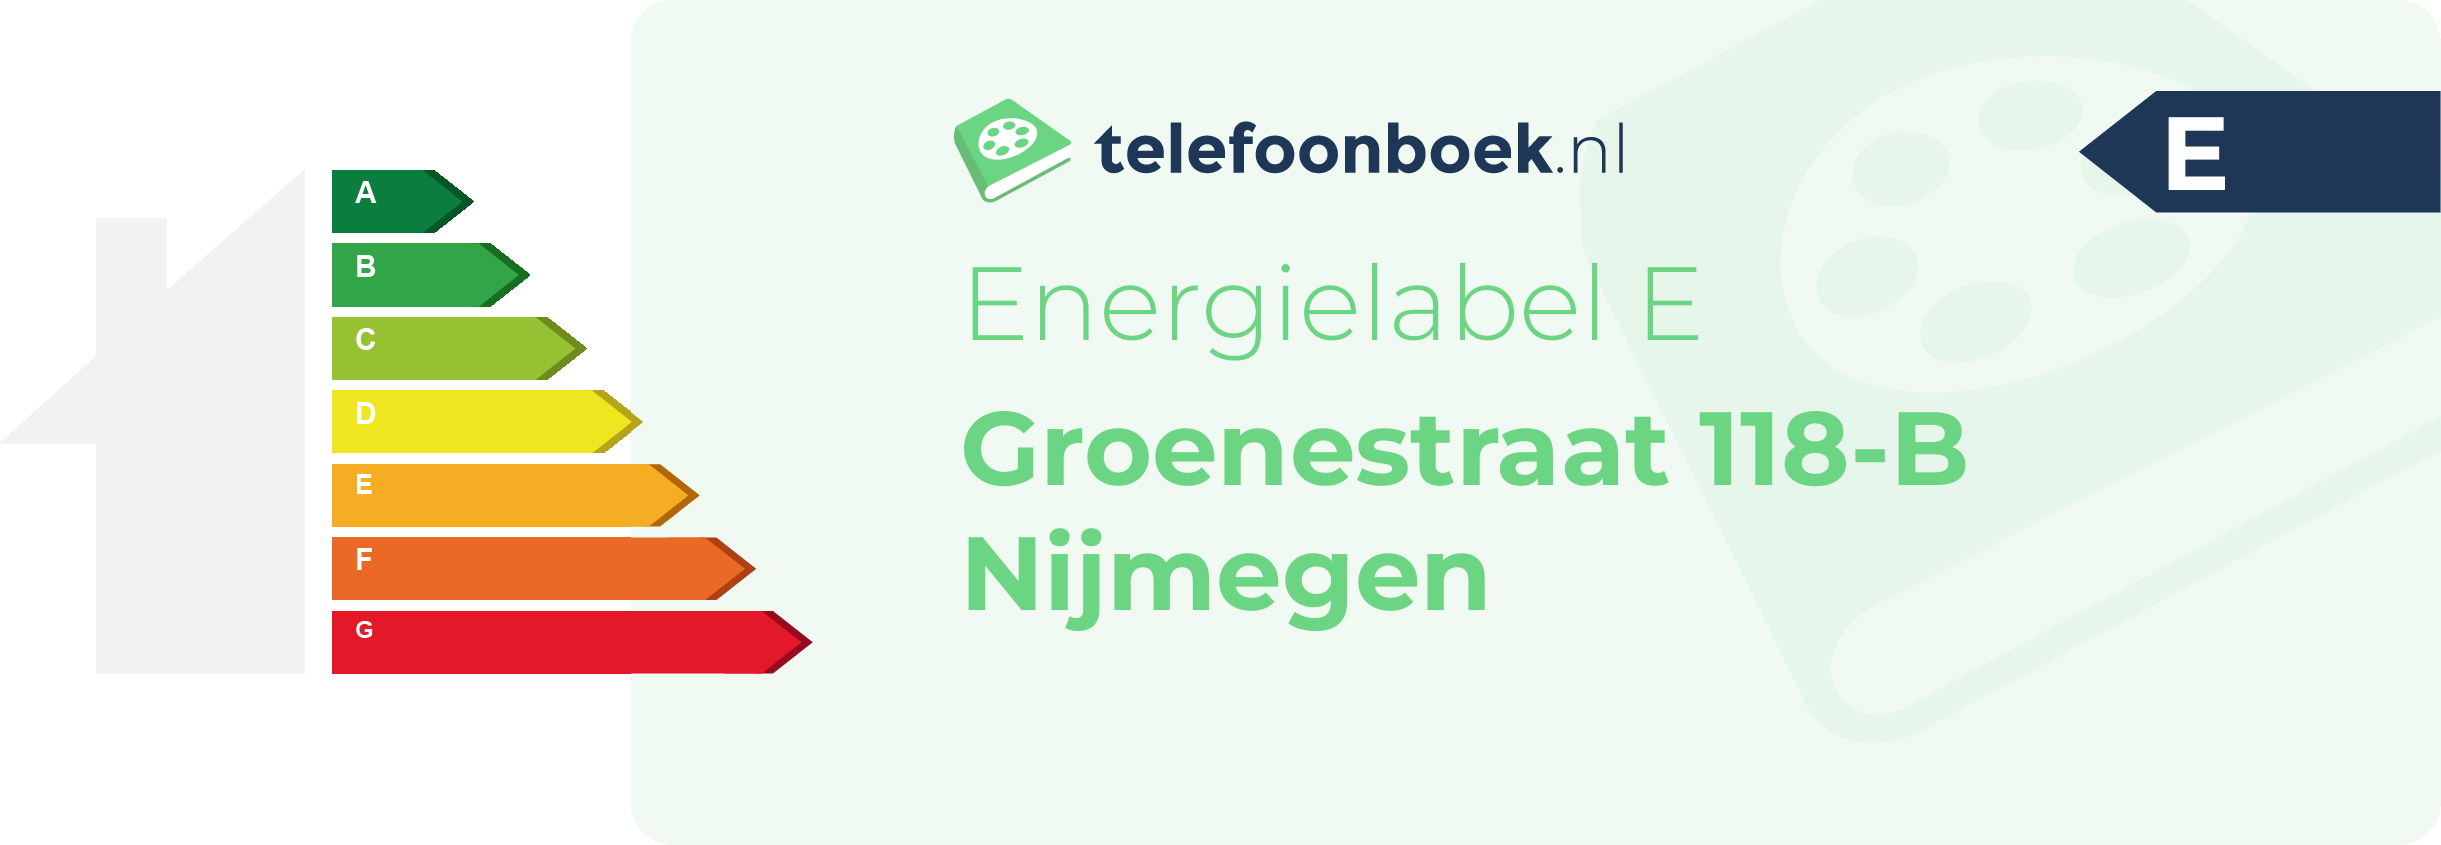 Energielabel Groenestraat 118-B Nijmegen